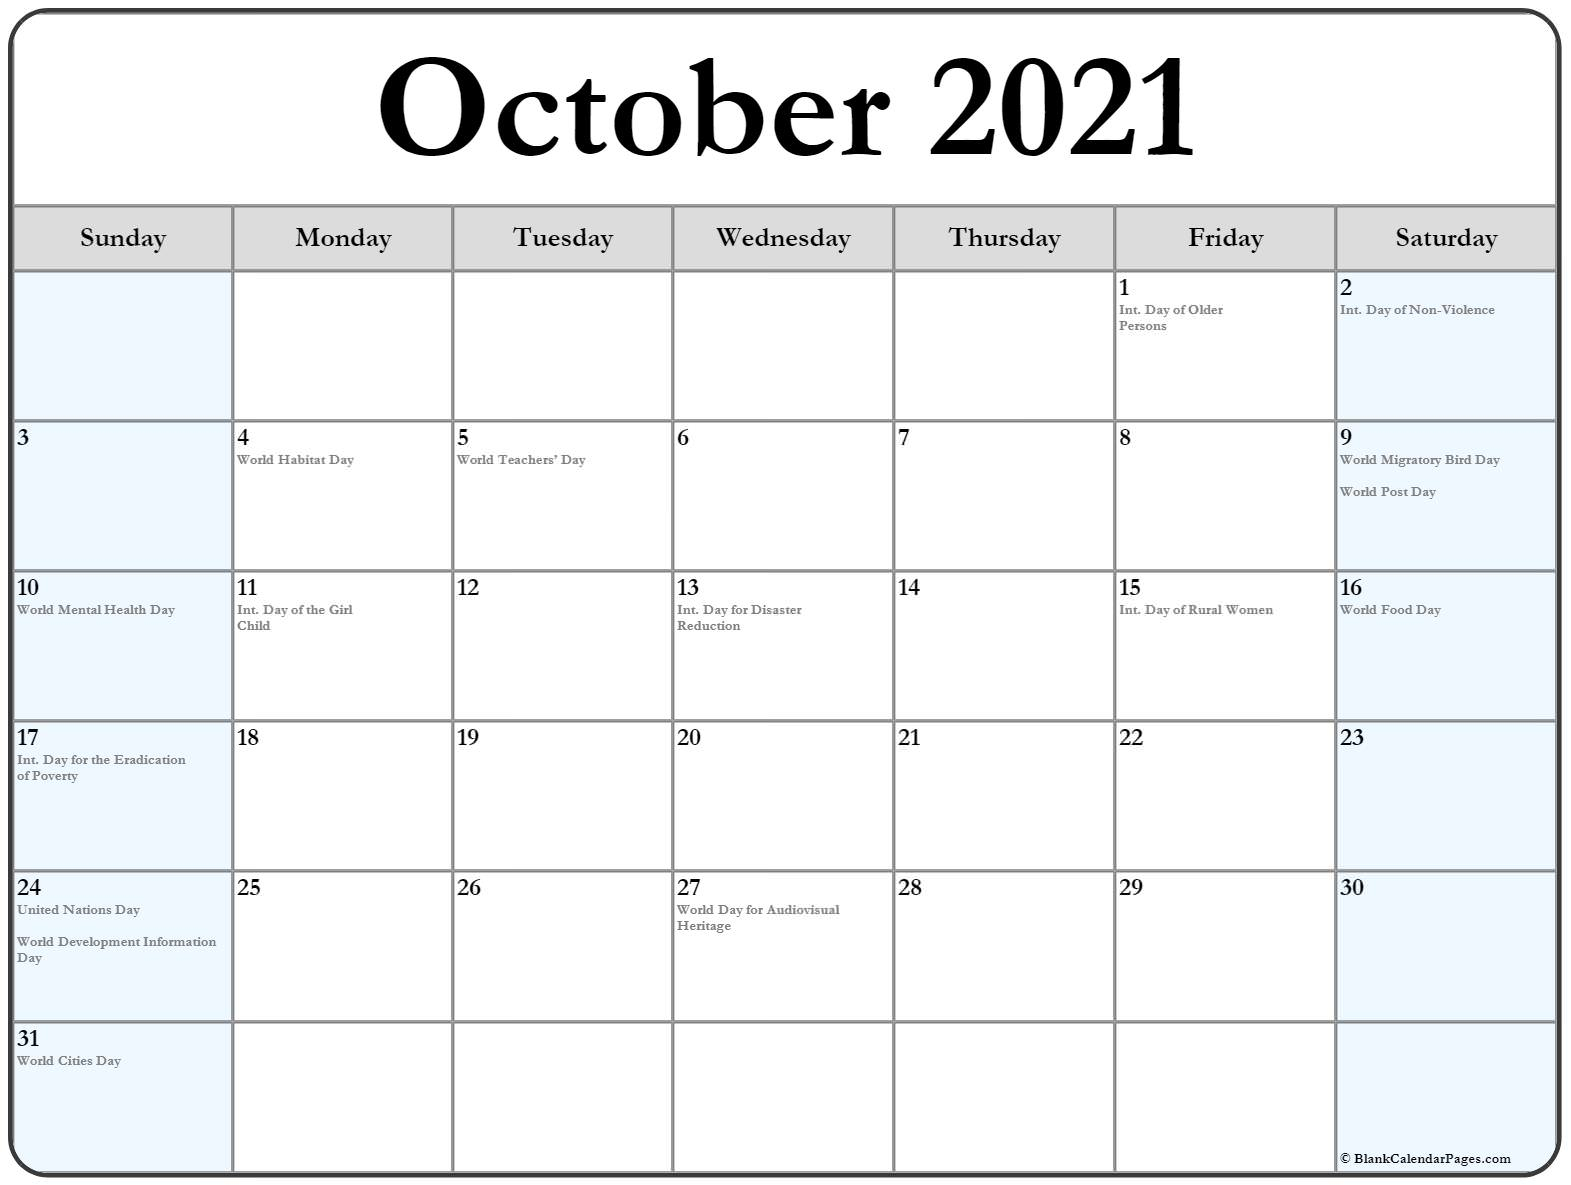 Take 2022 October Calendar With Festivals